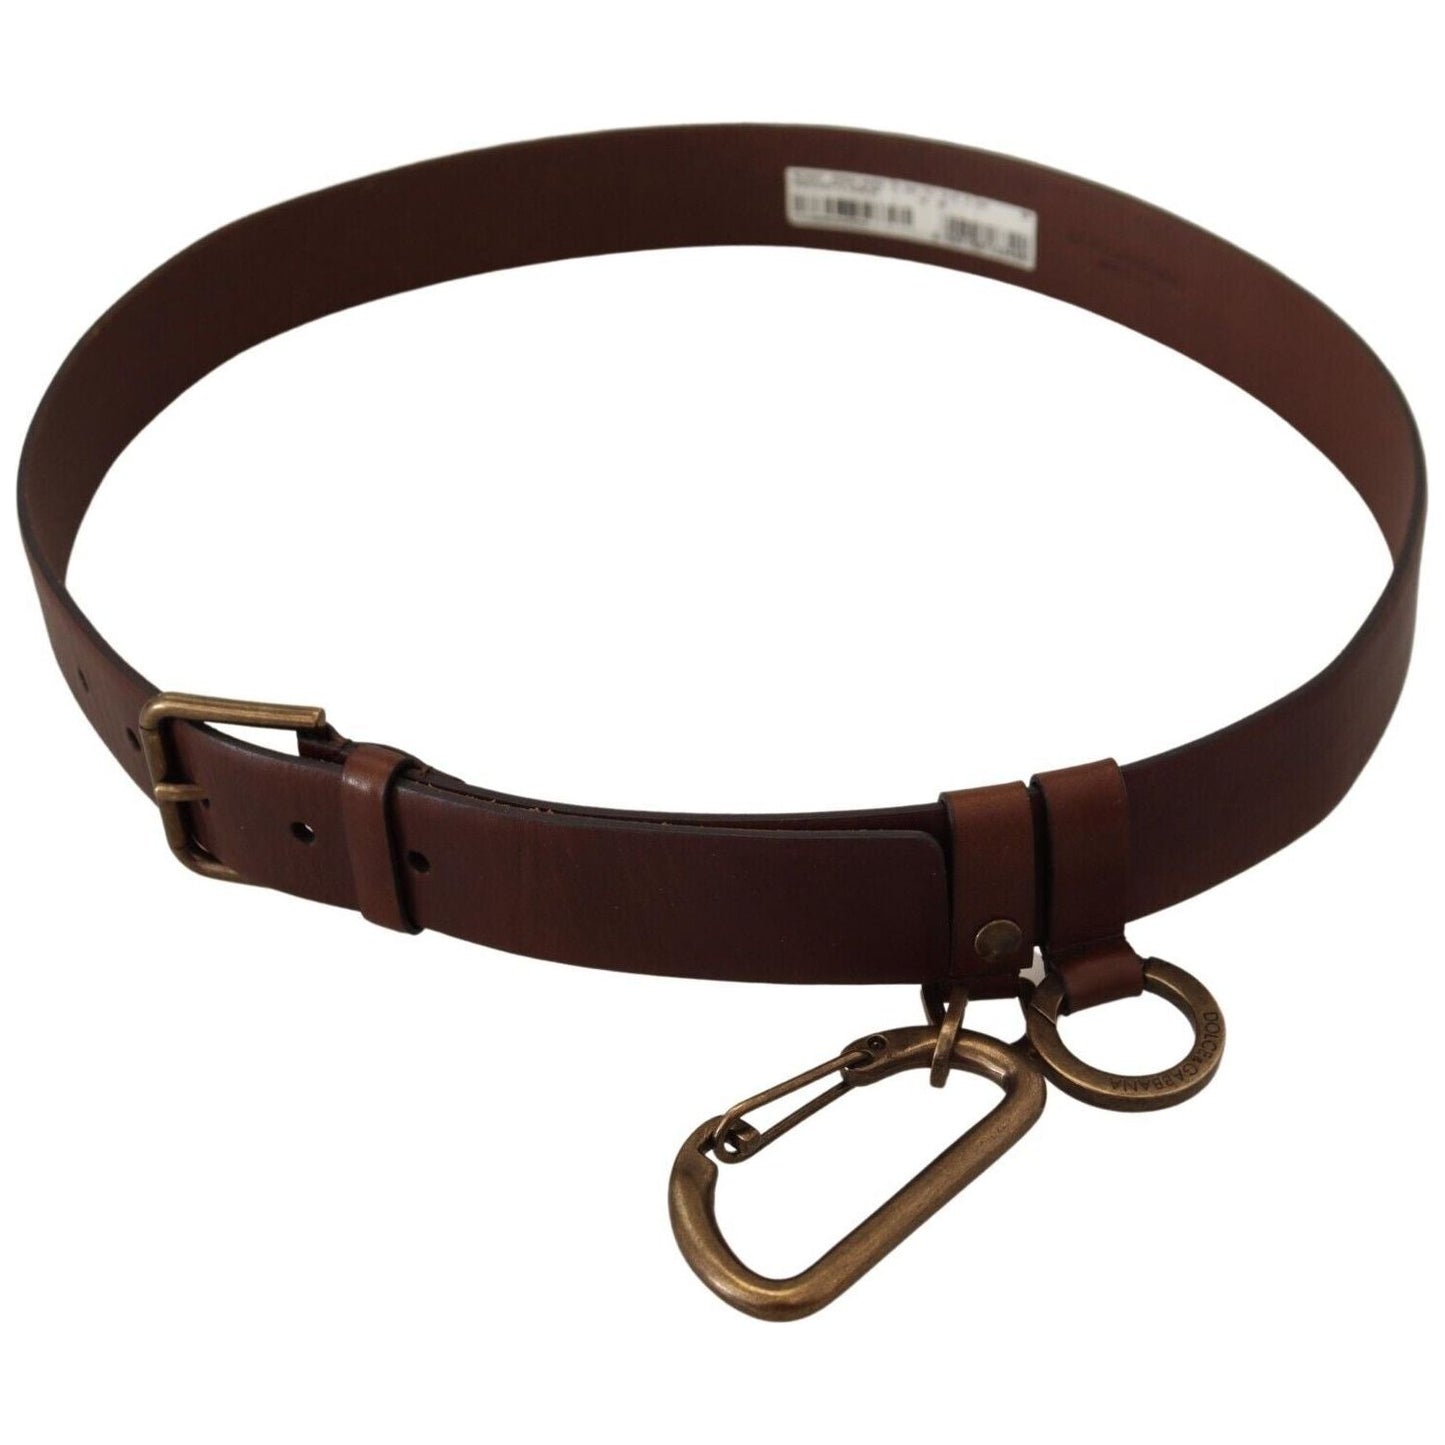 Elegant Brown Leather Belt with Metal Buckle